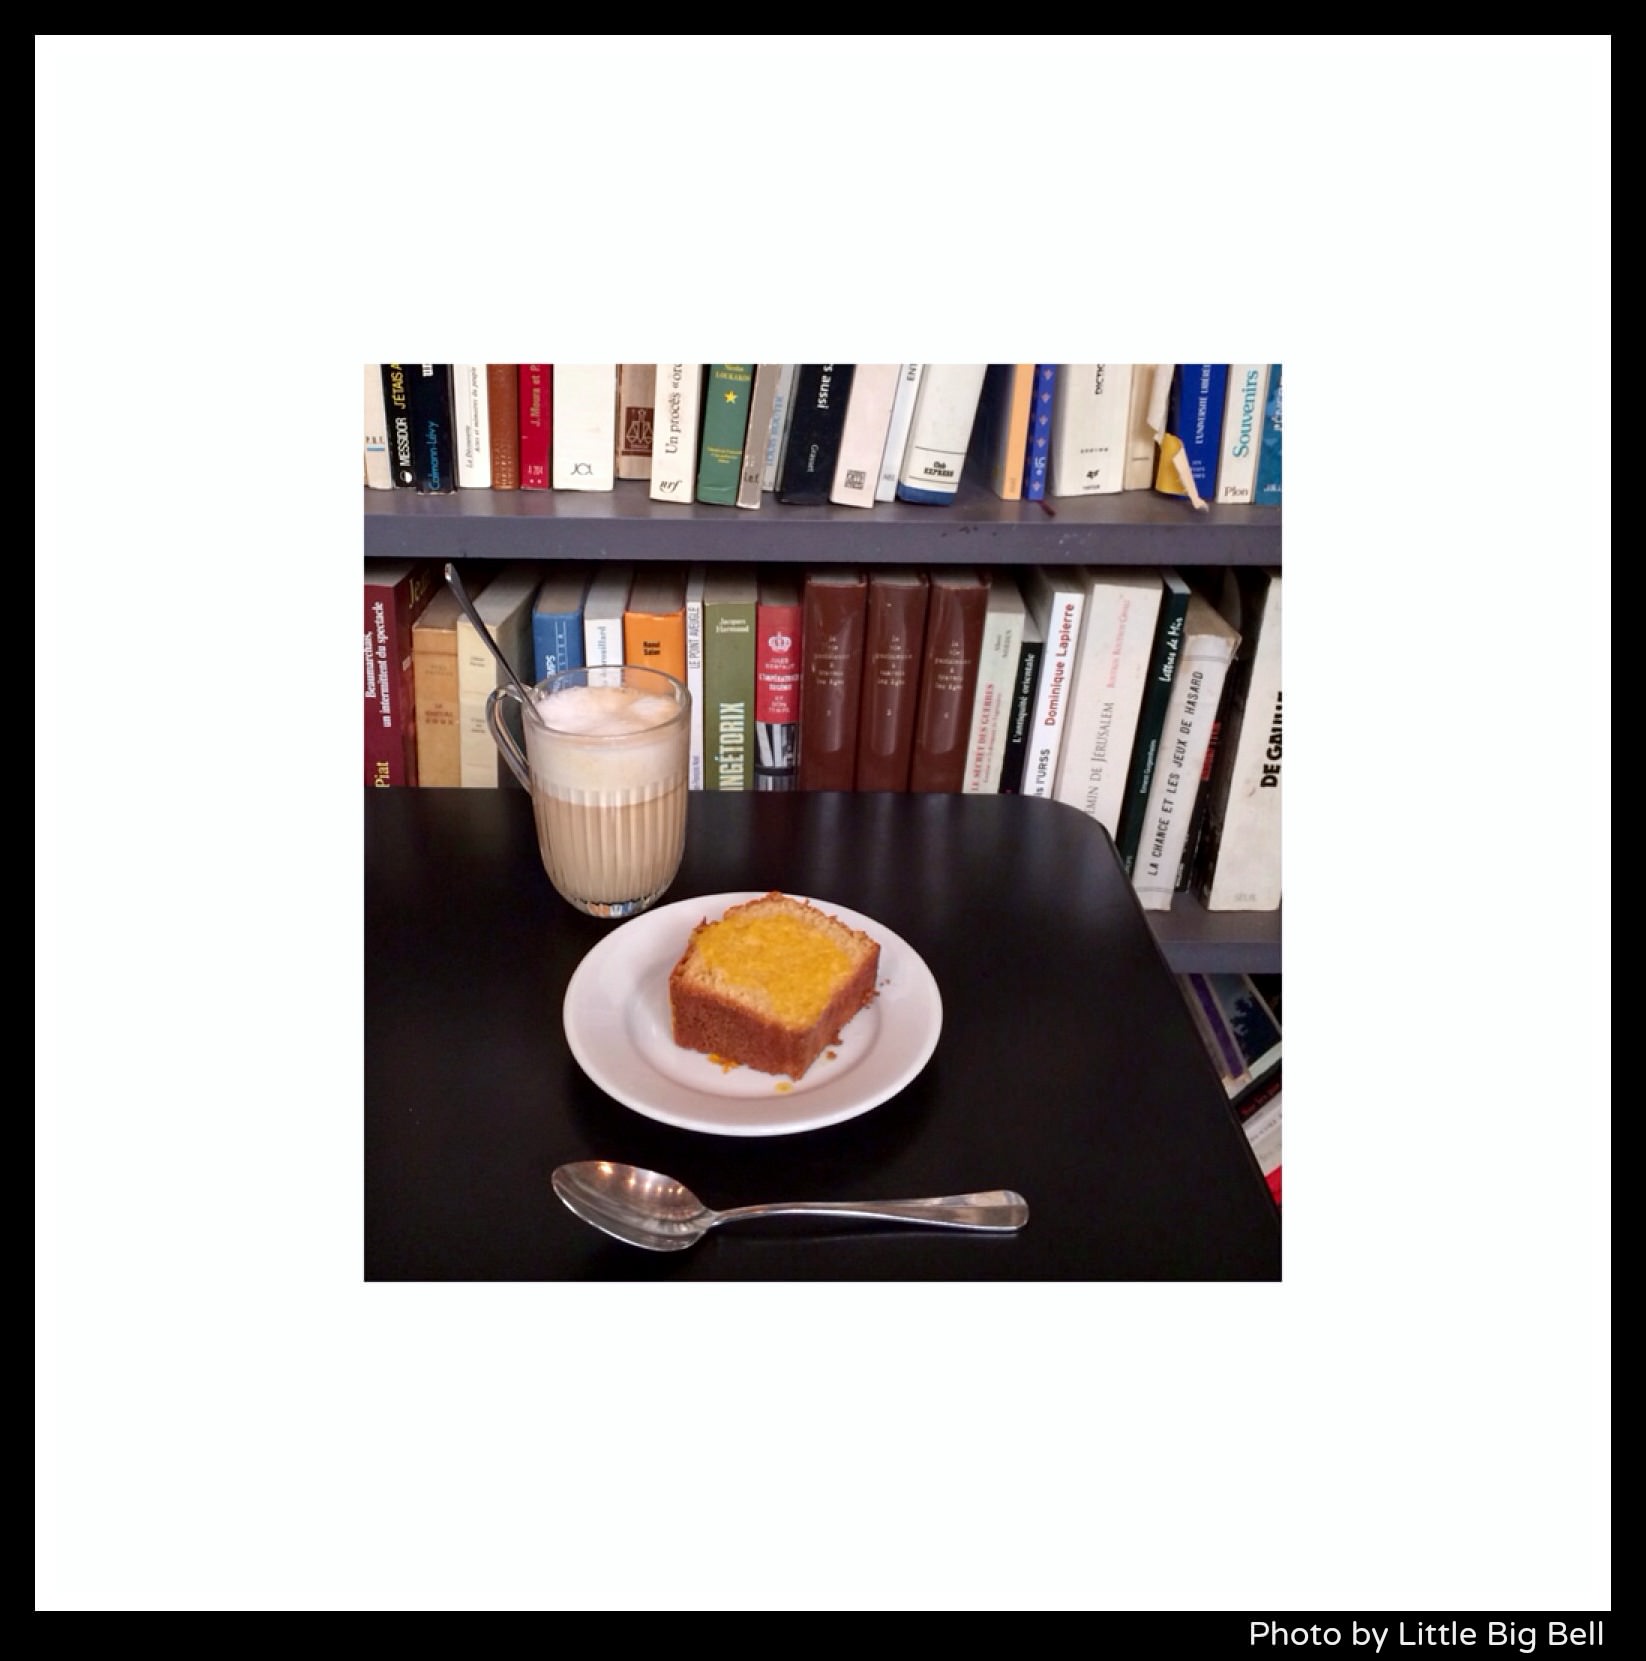 Merci-Paris-cafe-cake-photo-by-Little-Big-Bell.jpg